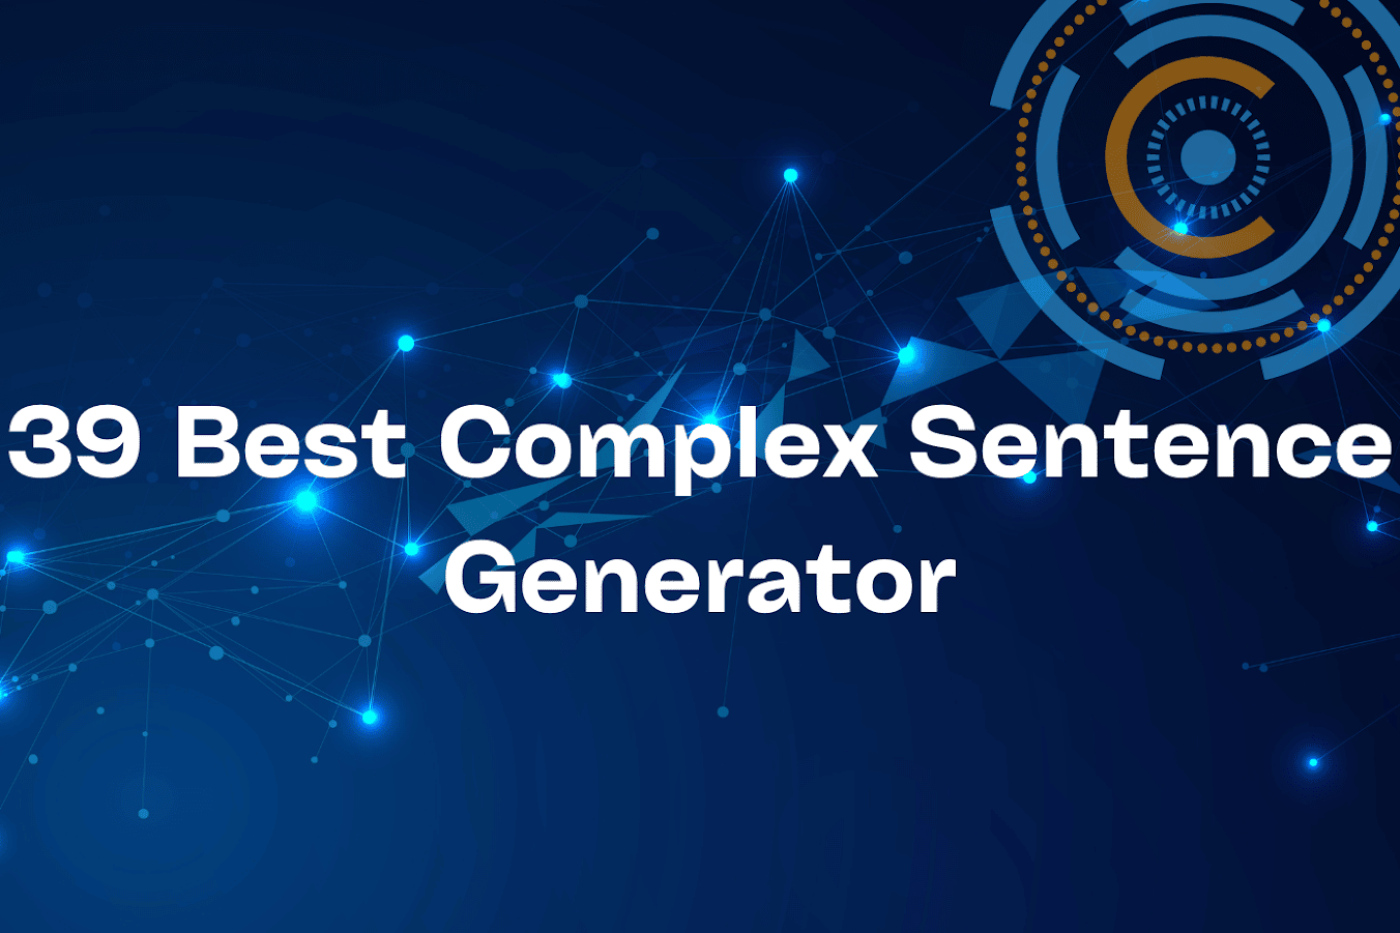 Complex Sentence Generator